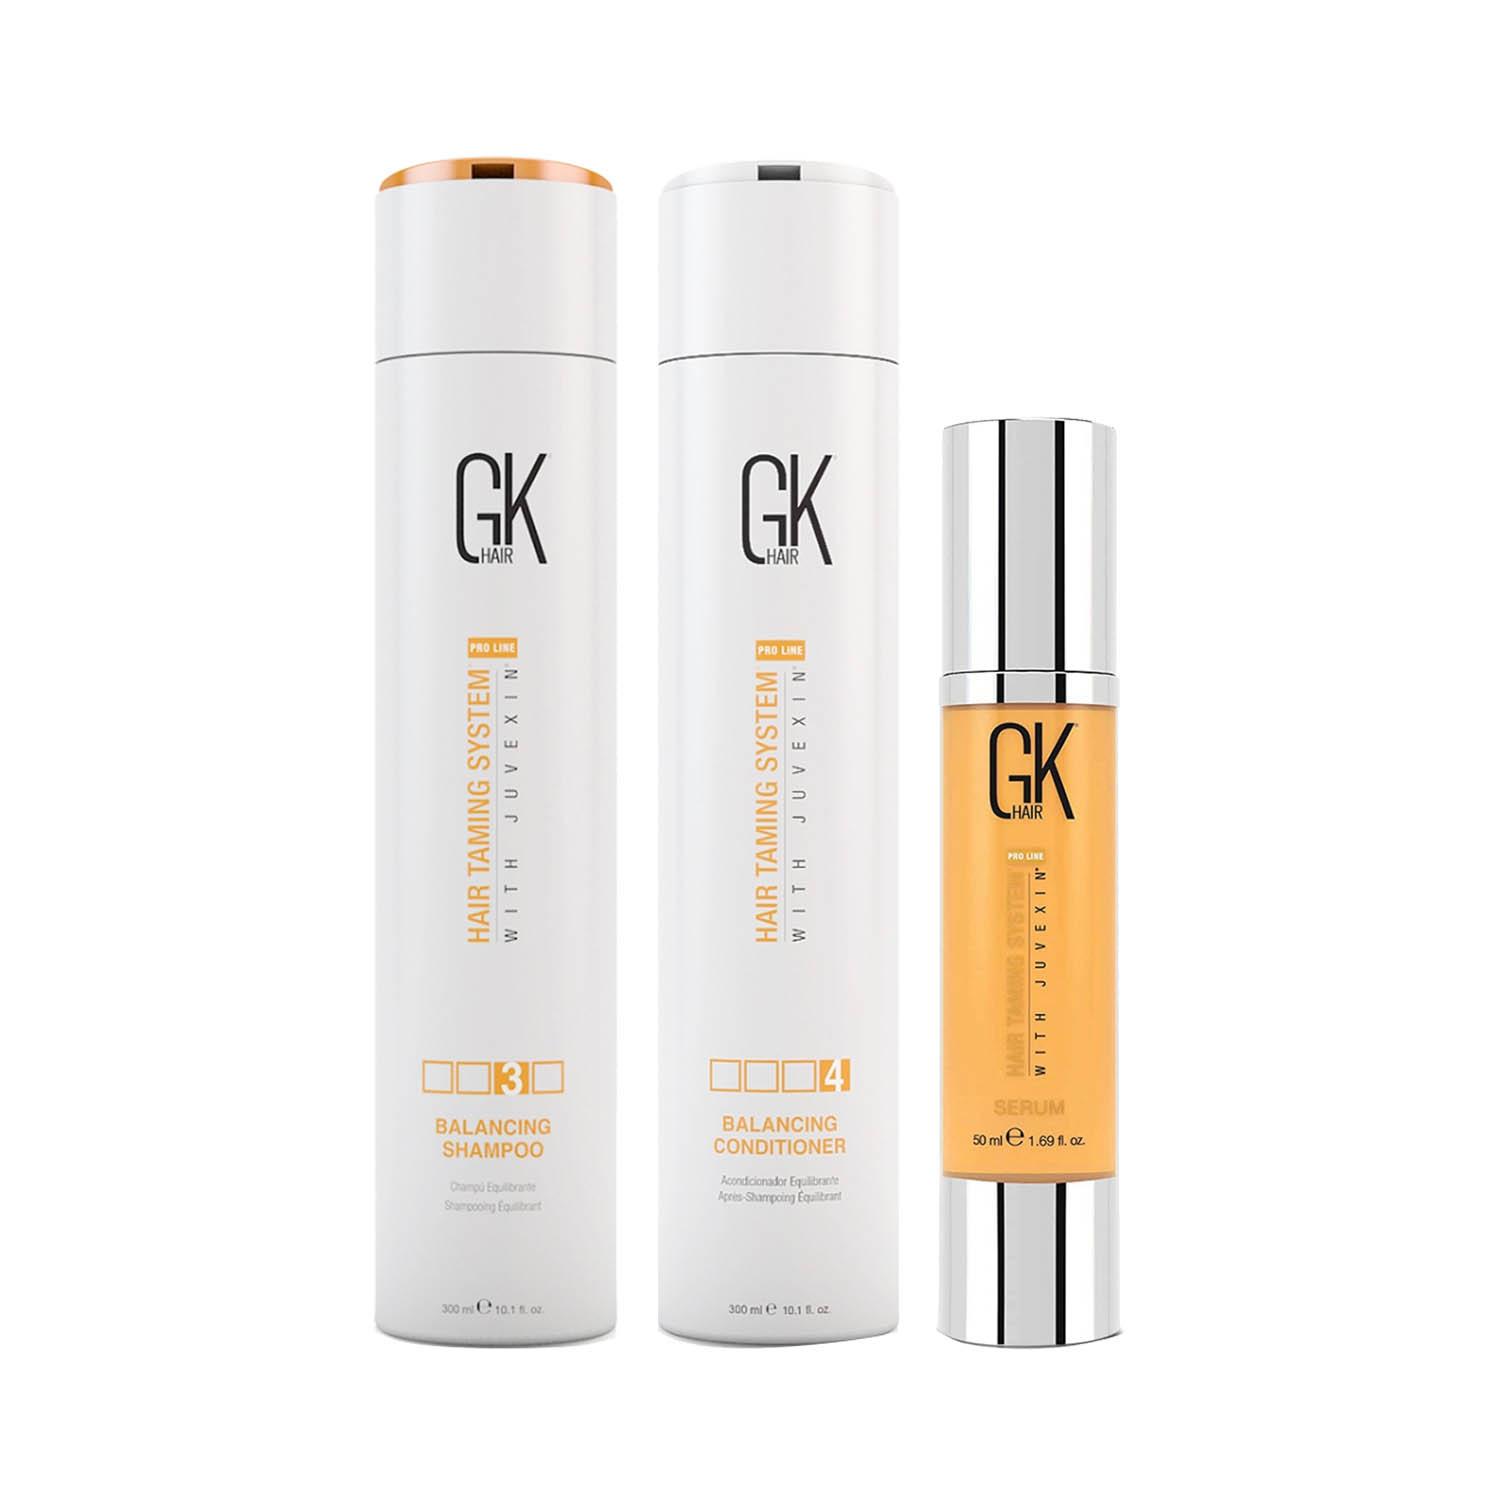 GK Hair | GK Hair Balancing Shampoo and Conditioner (300ml) with Argan serum (50ml) Combo